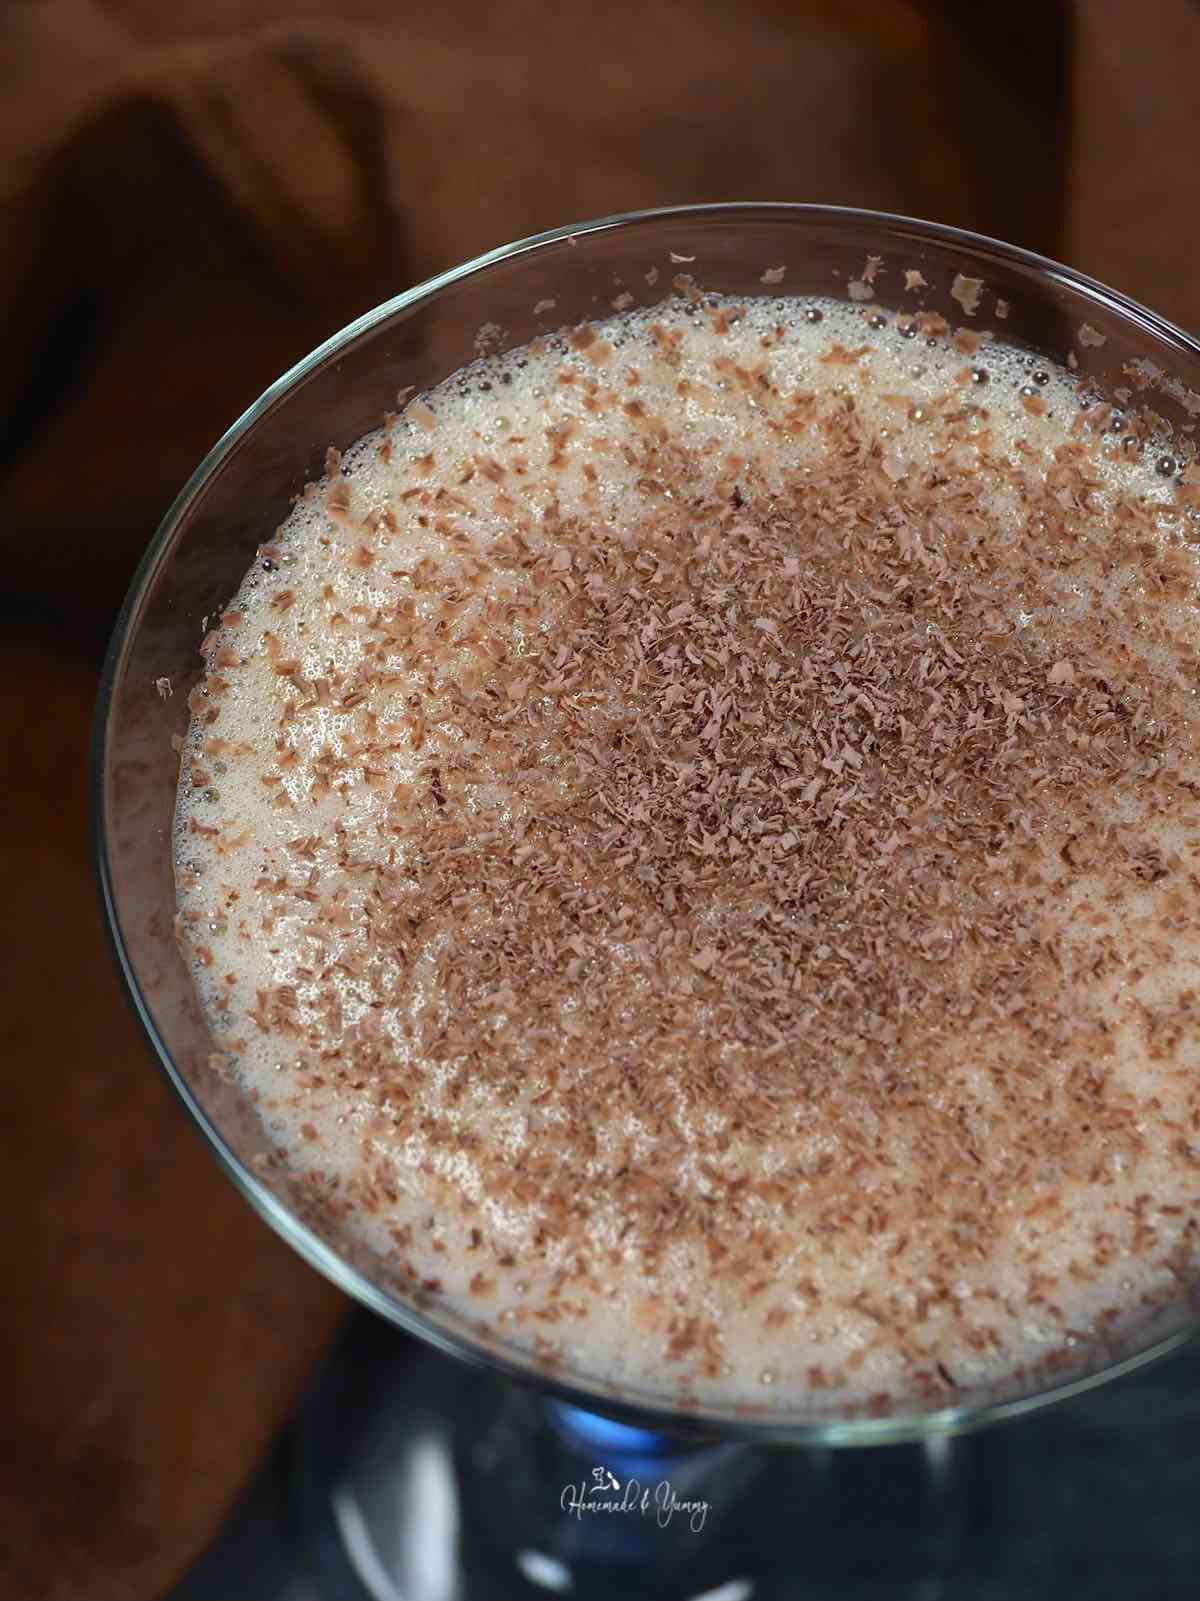 Chocolate shavings on a coffee martini.